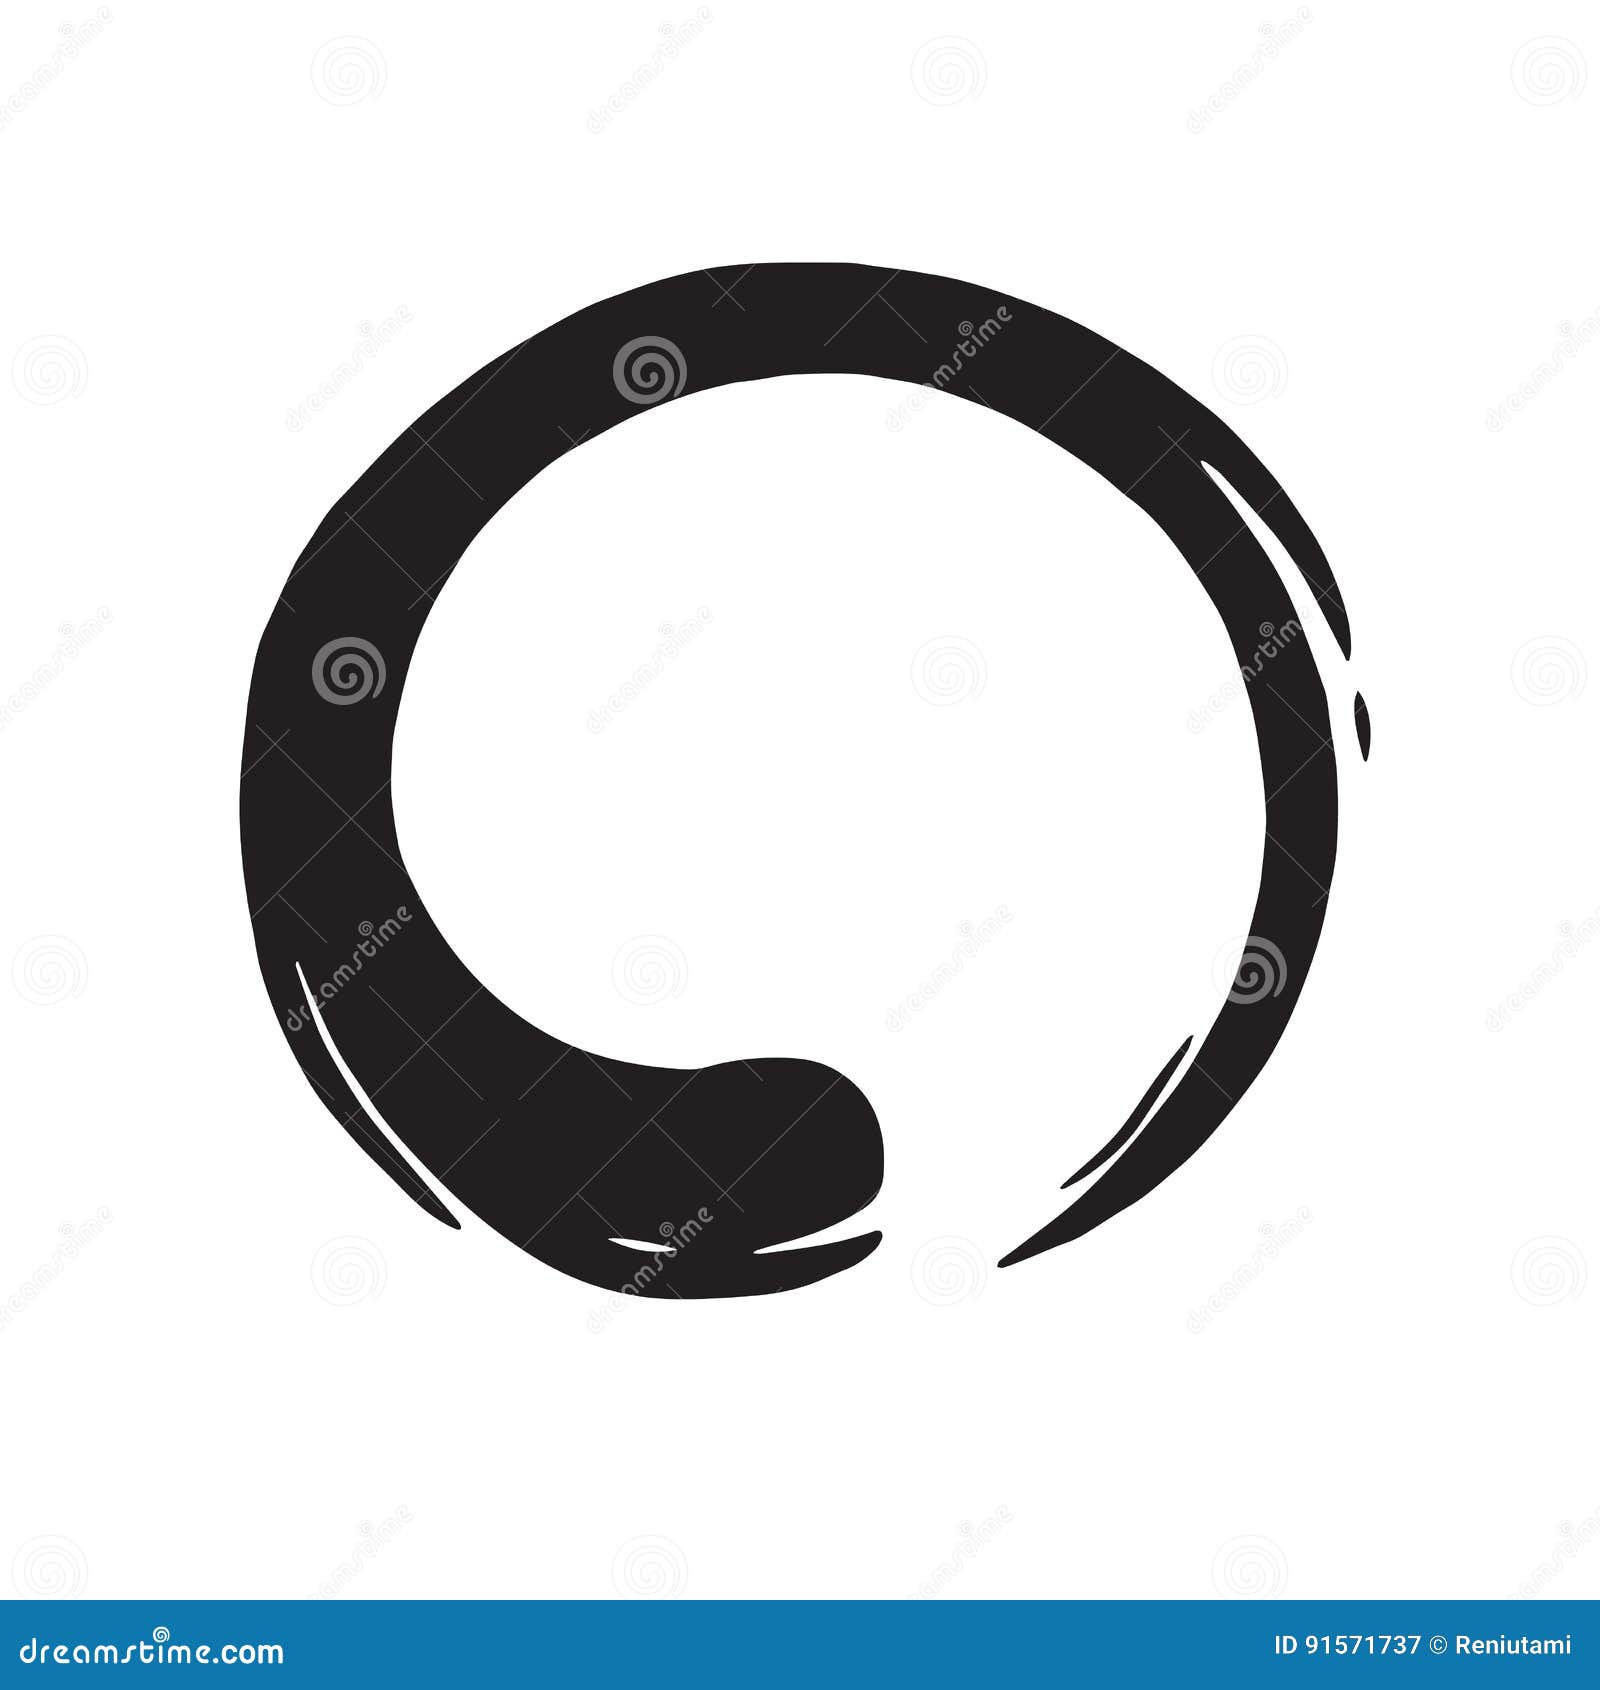 zen circle logo hand drawn 